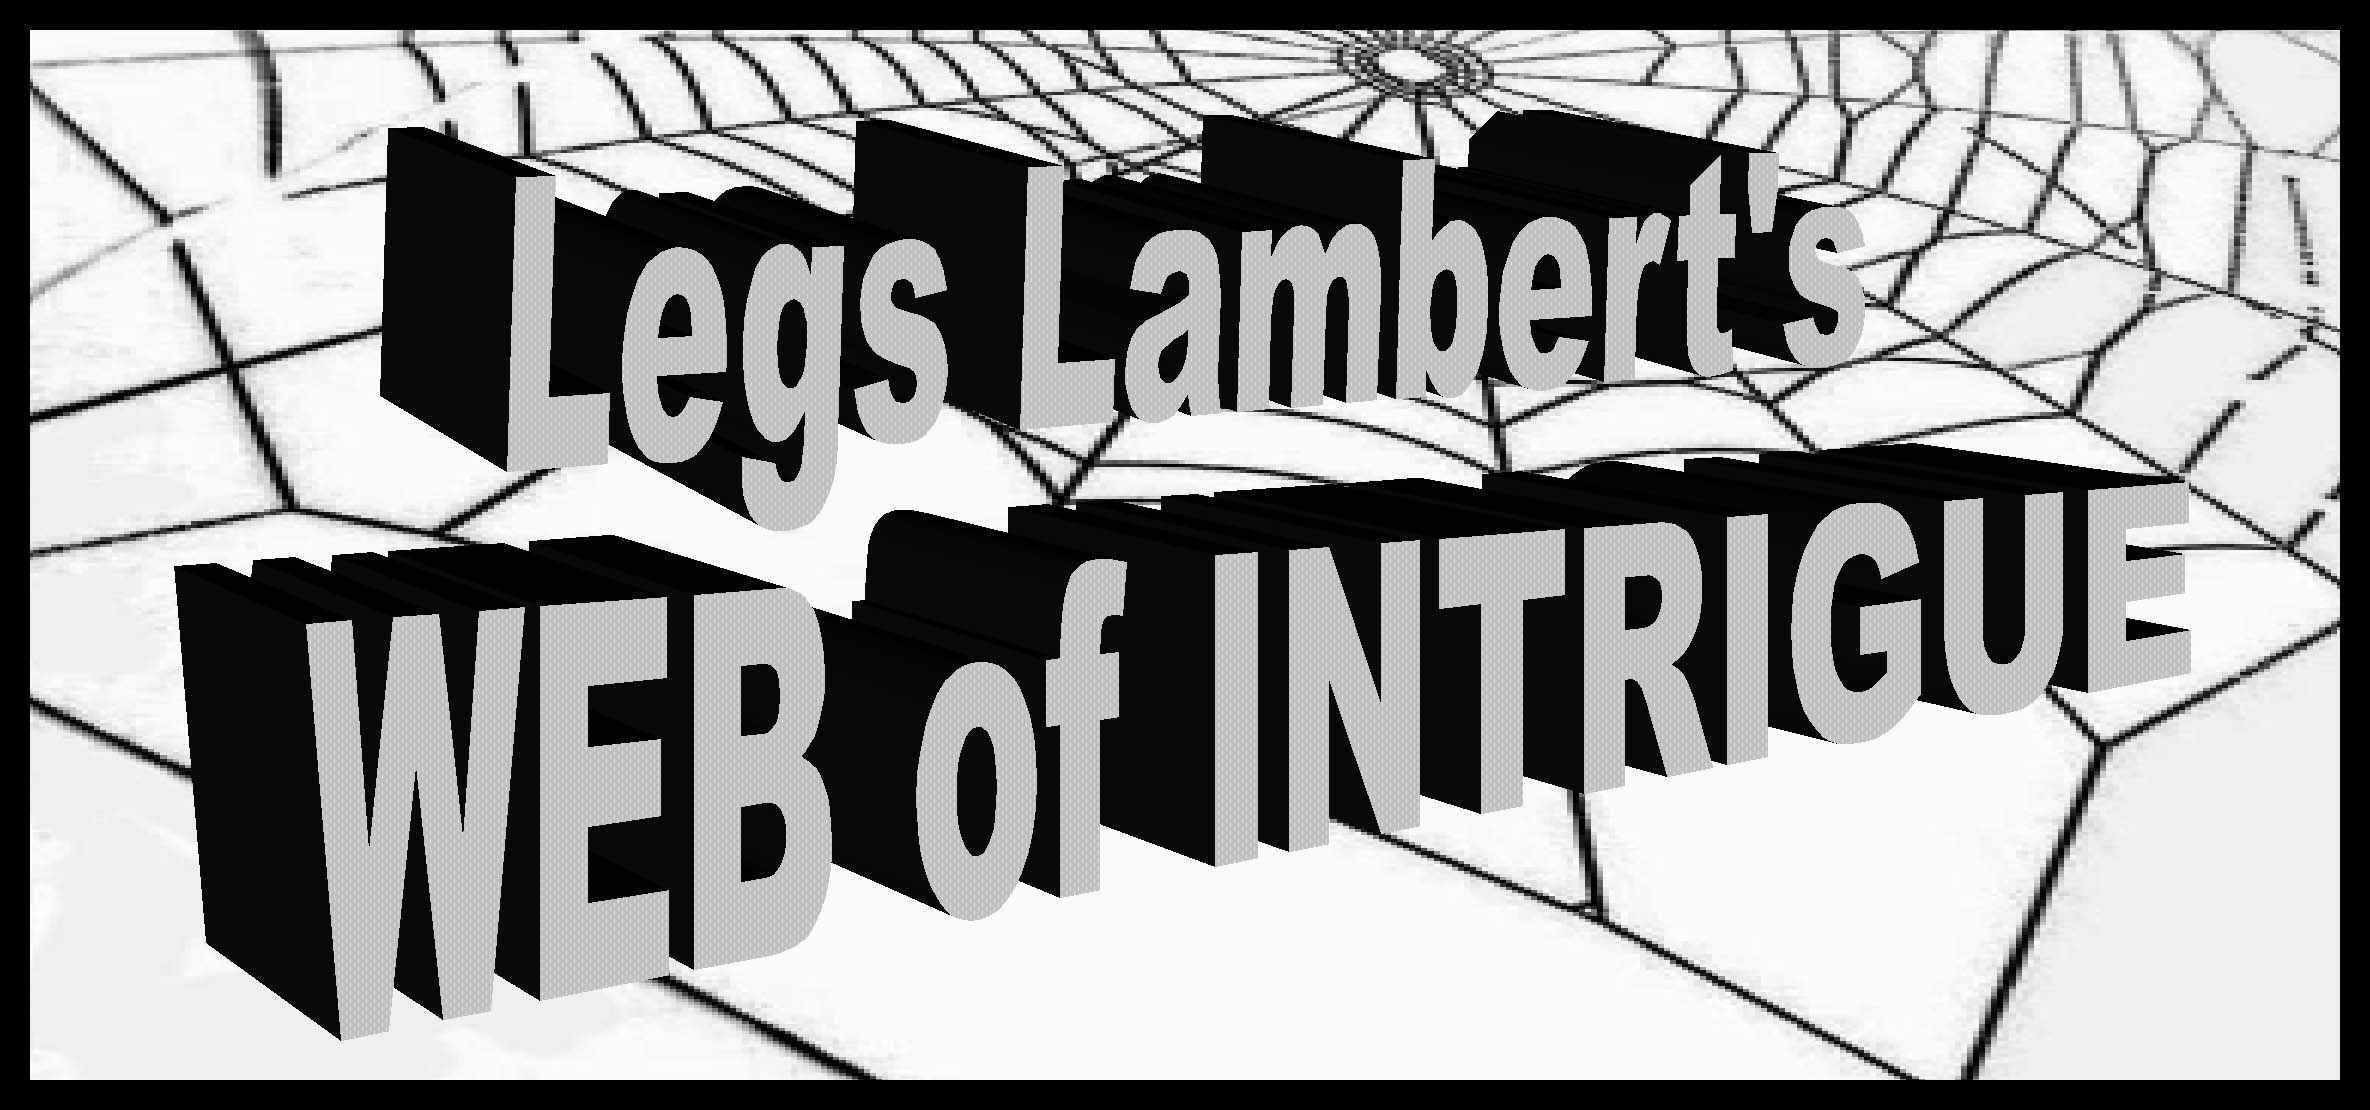 Legs Lambert's Web of Intrigue